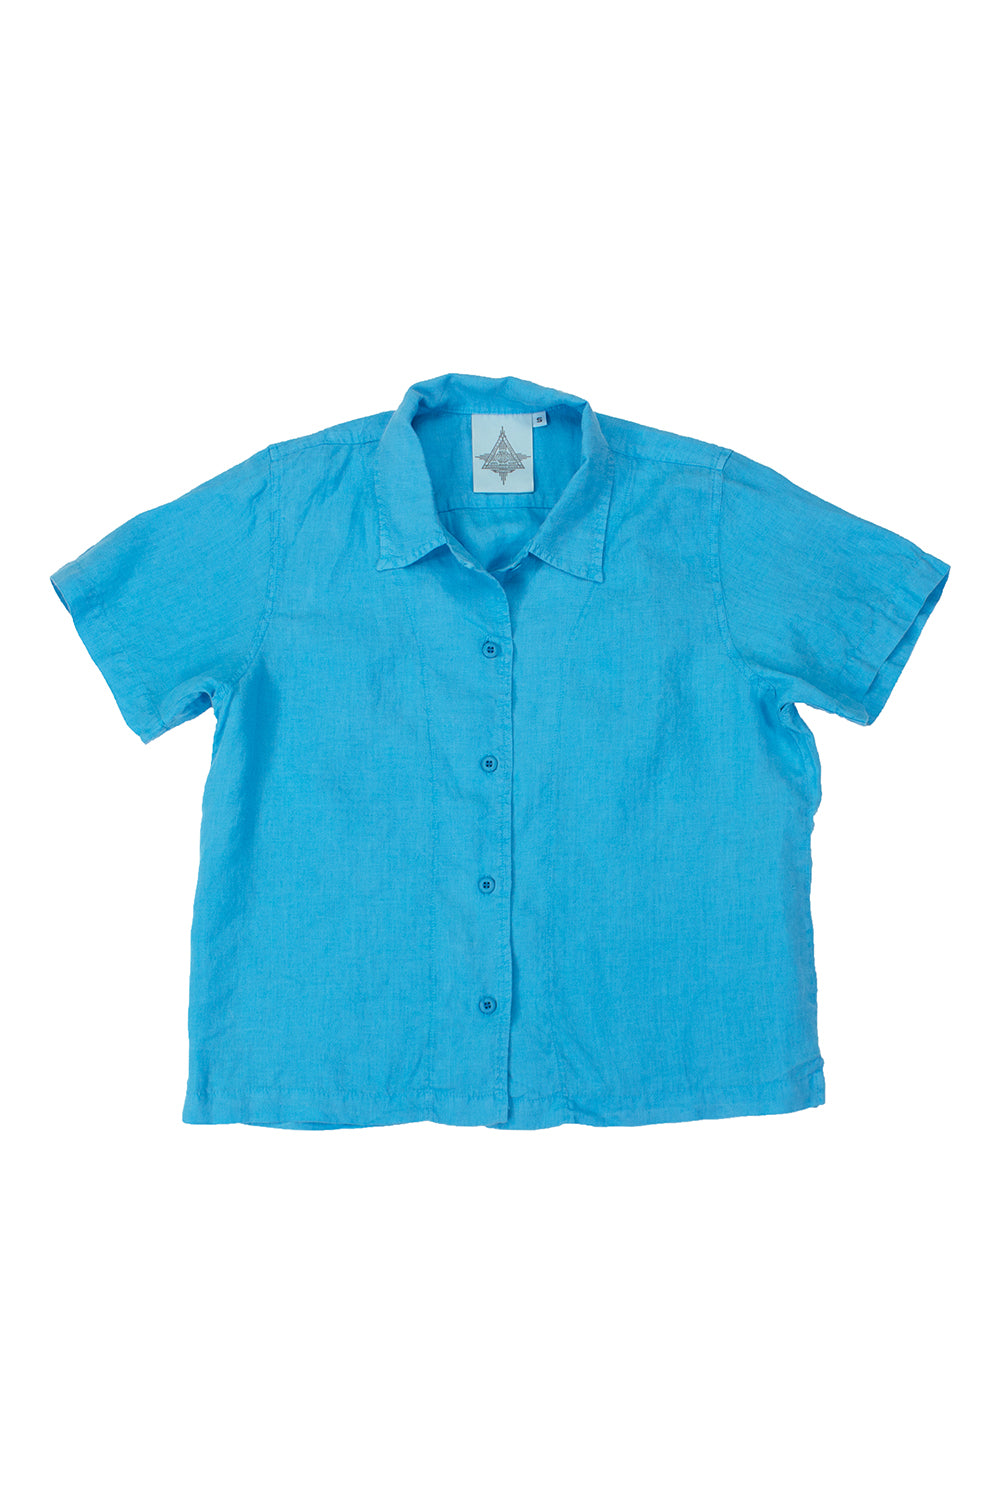 Tucson Shirt | Jungmaven Hemp Clothing & Accessories / Color: Turquoise